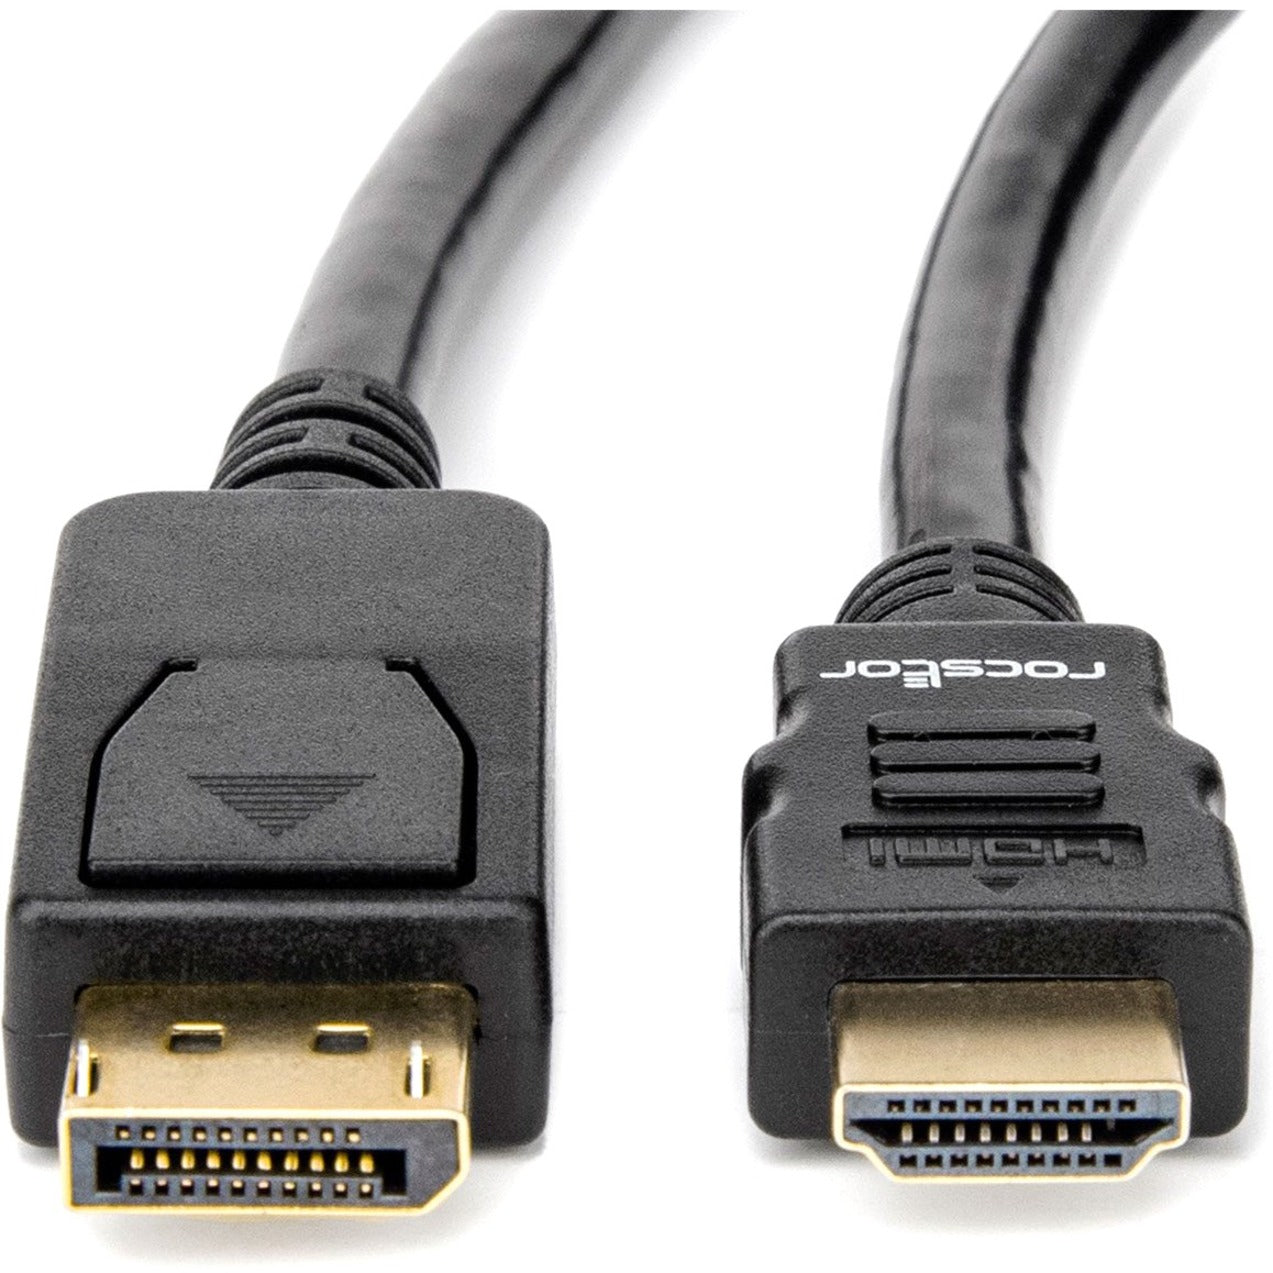 Rocstor Y10C127-B1 Premium DisplayPort to HDMI Converter Cable - 6 ft 4K, HDMI Male to DisplayPort Male